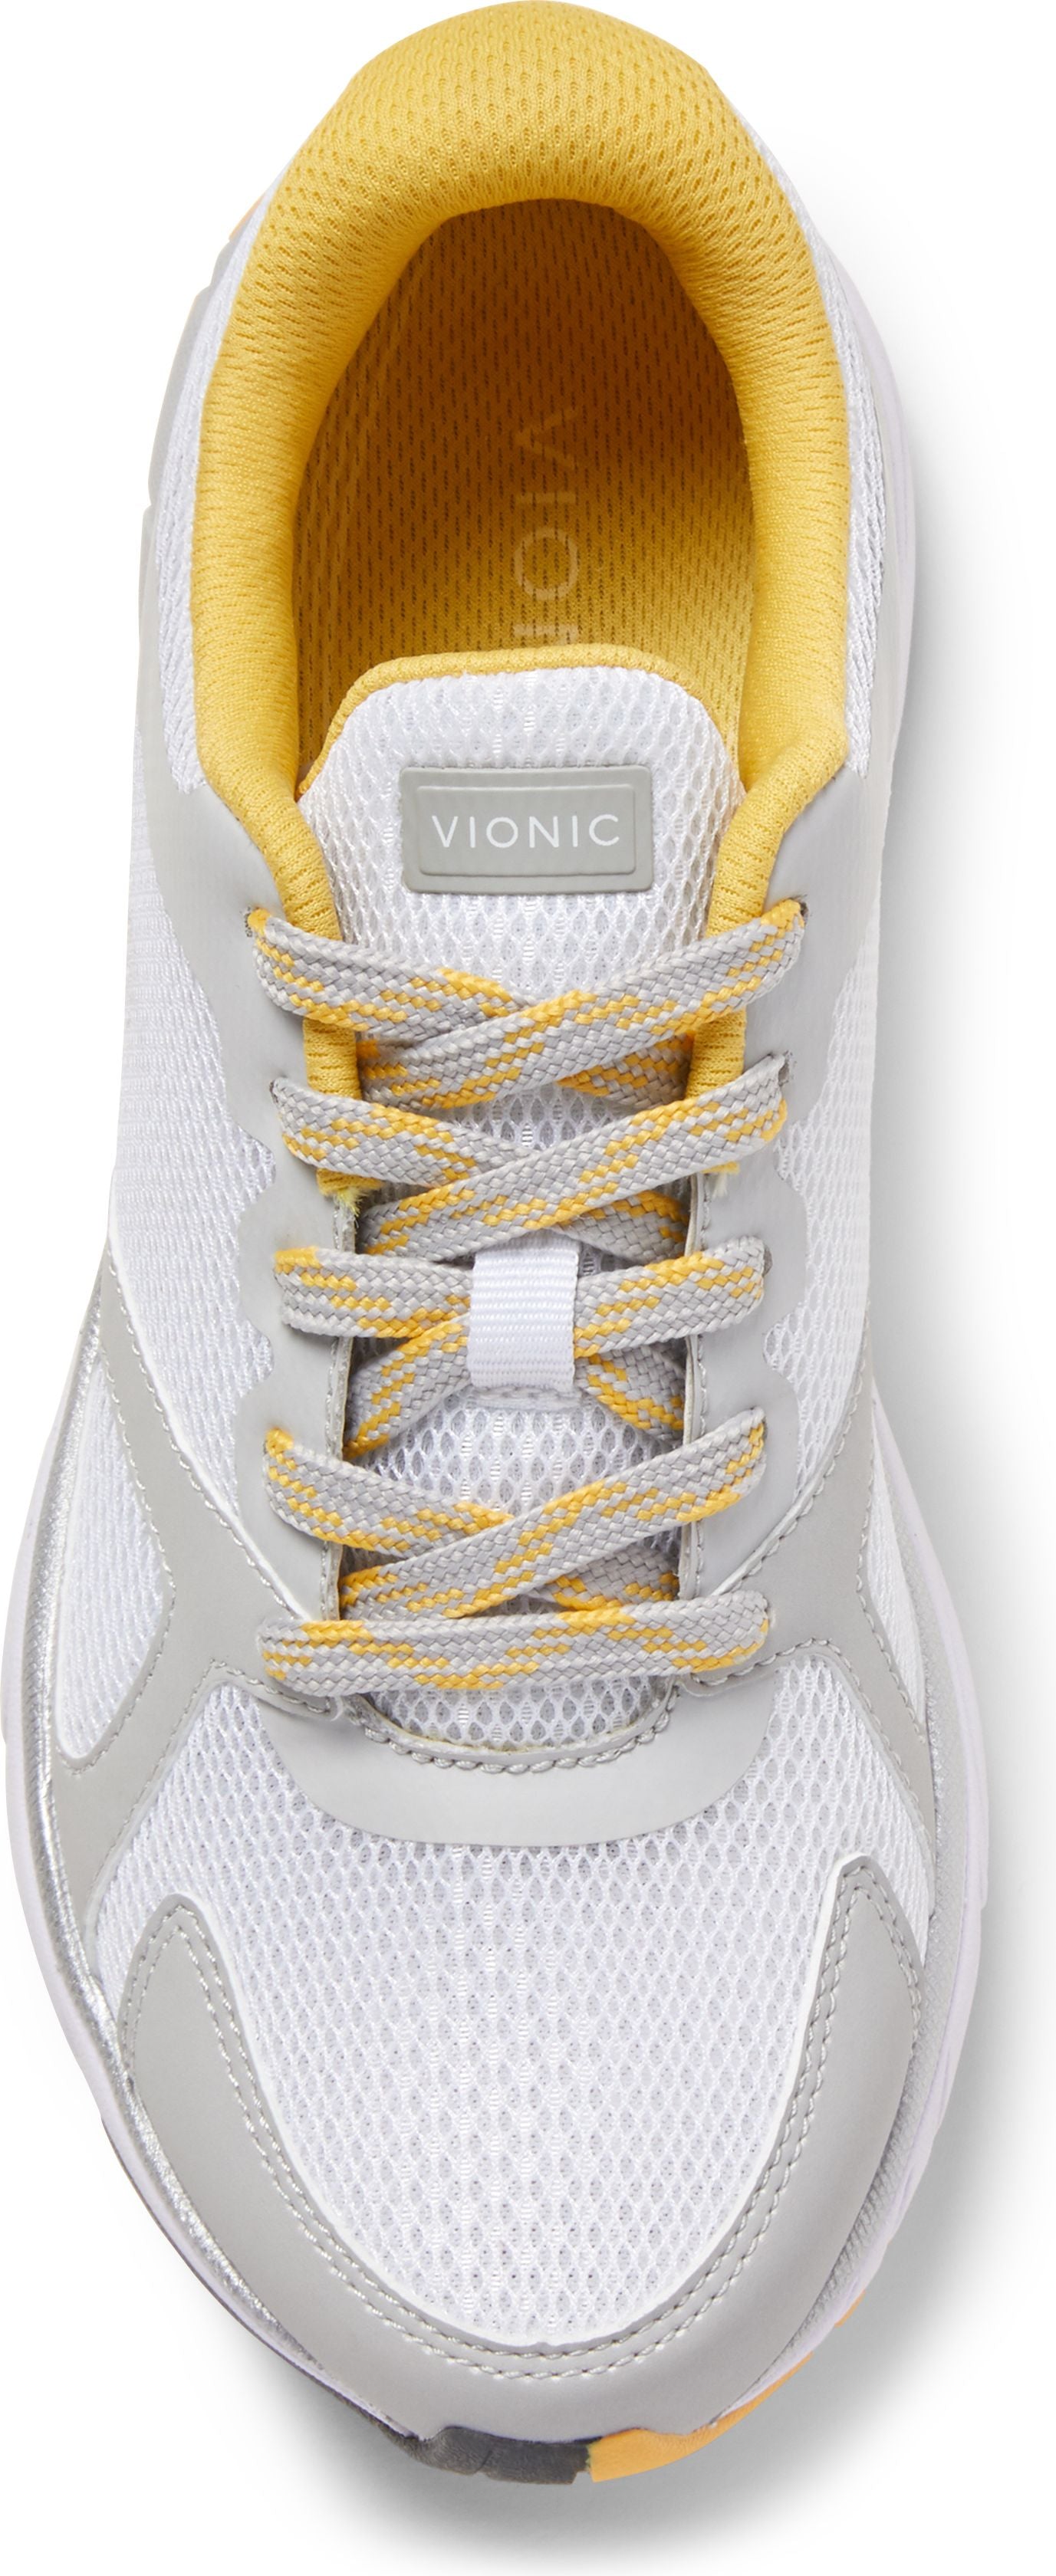 Vionic Shoes Drift1 Tokyo Lace Up White